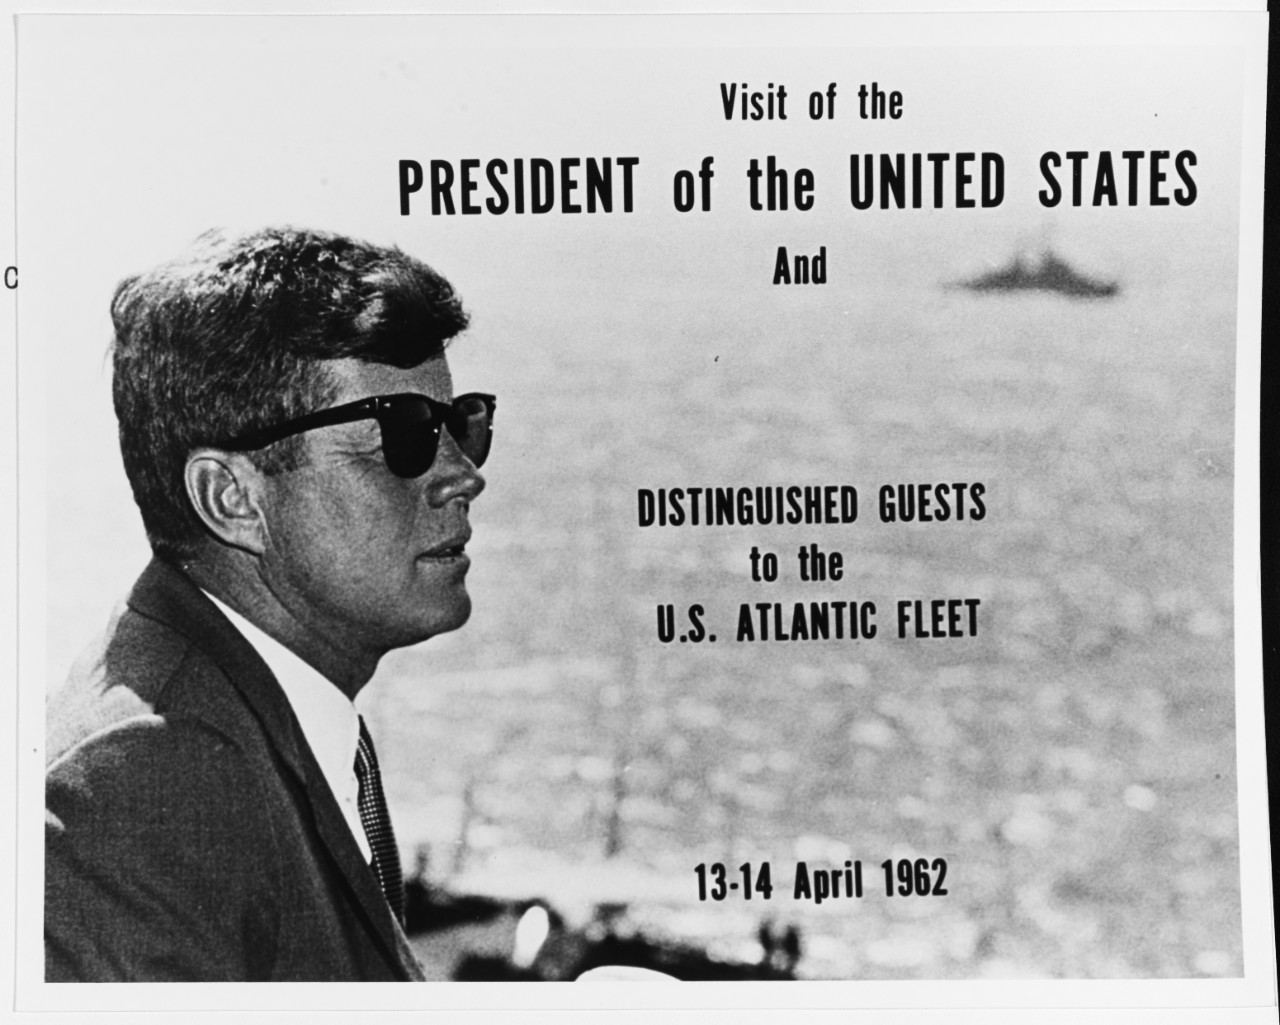 President John F. Kennedy's visit to the U.S. Atlantic Fleet, 13-14 April 1962.